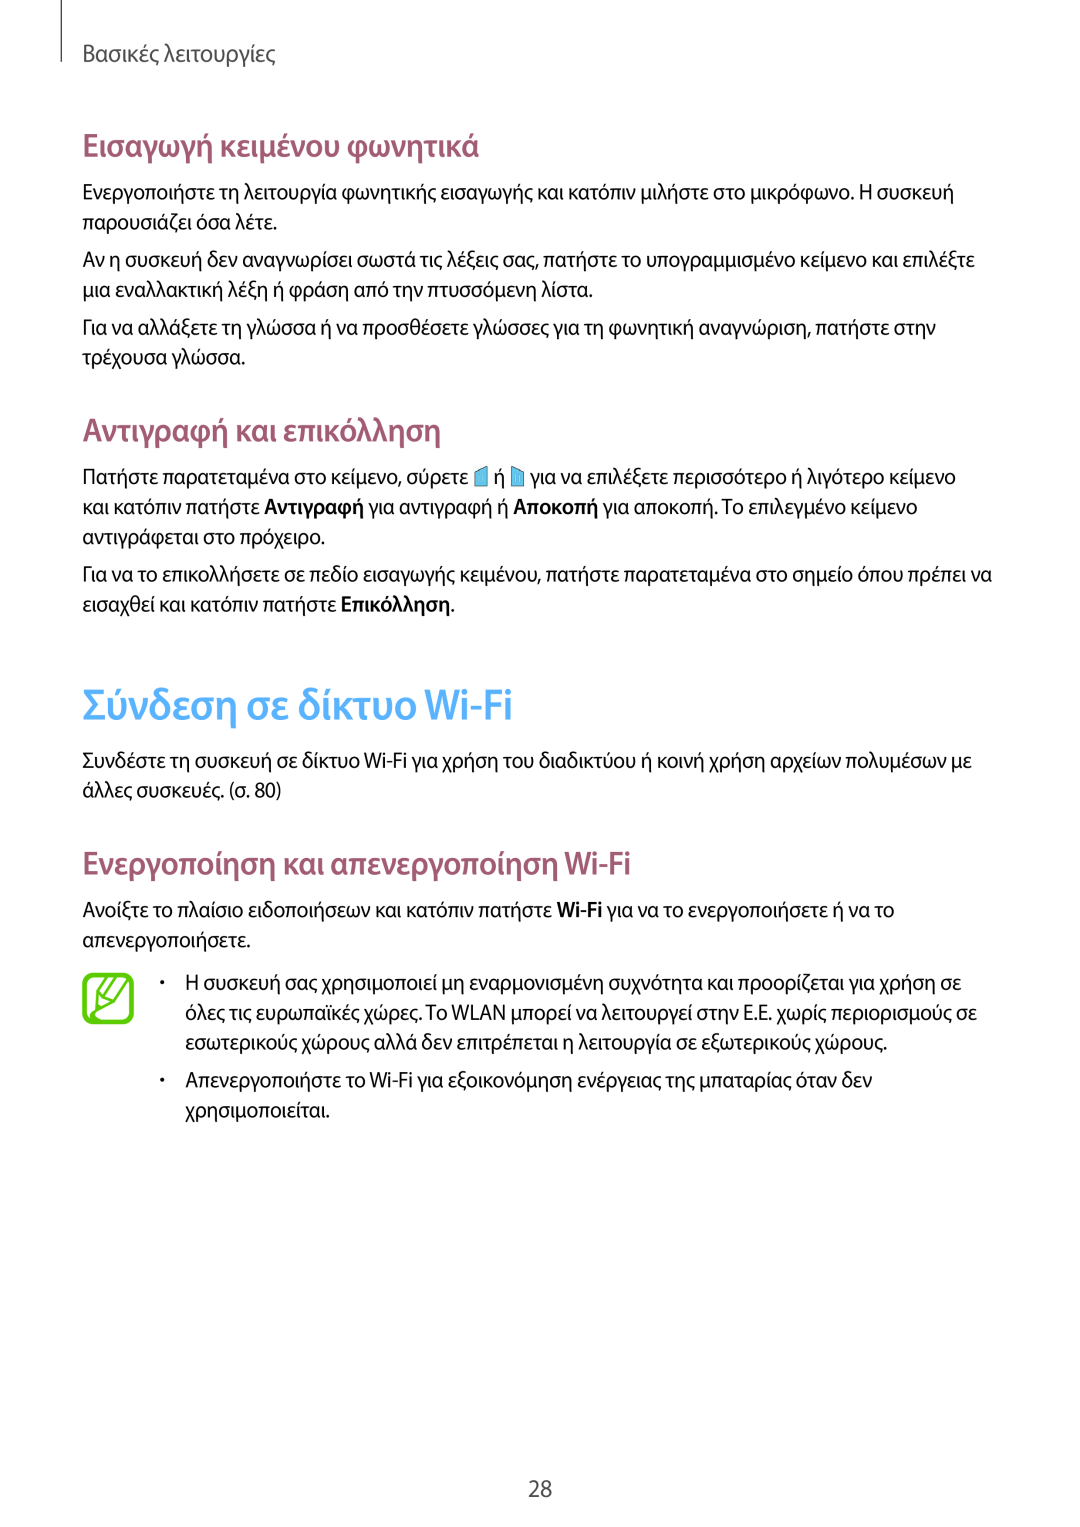 Samsung GT-P5210MKAEUR Σύνδεση σε δίκτυο Wi-Fi, Εισαγωγή κειμένου φωνητικά, Αντιγραφή και επικόλληση, Βασικές λειτουργίες 